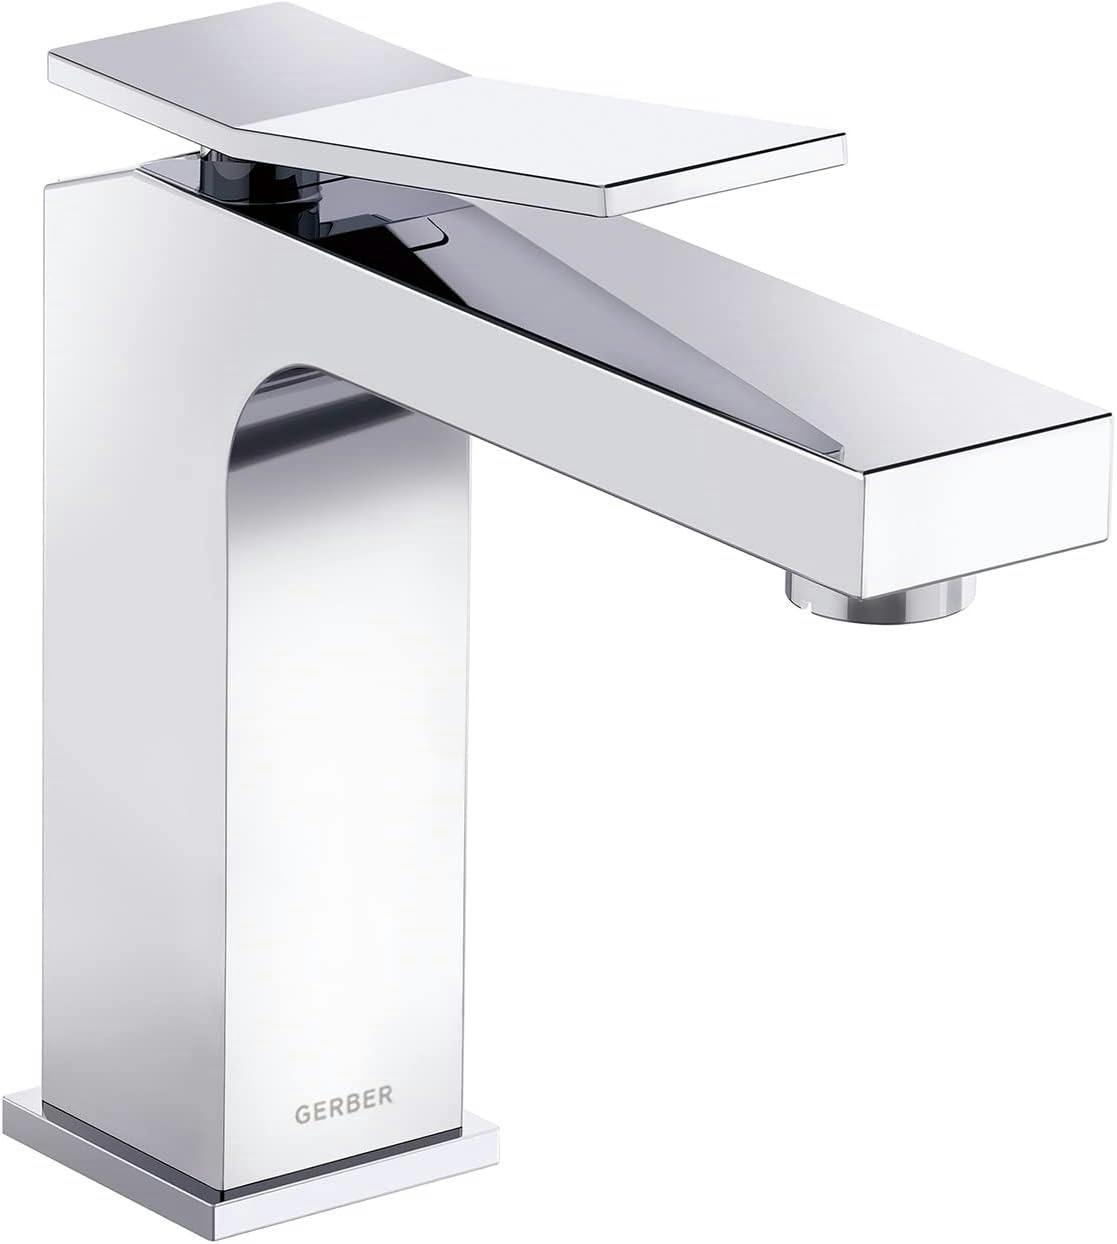 Avian Chrome Single-Handle Monoblock Bathroom Faucet